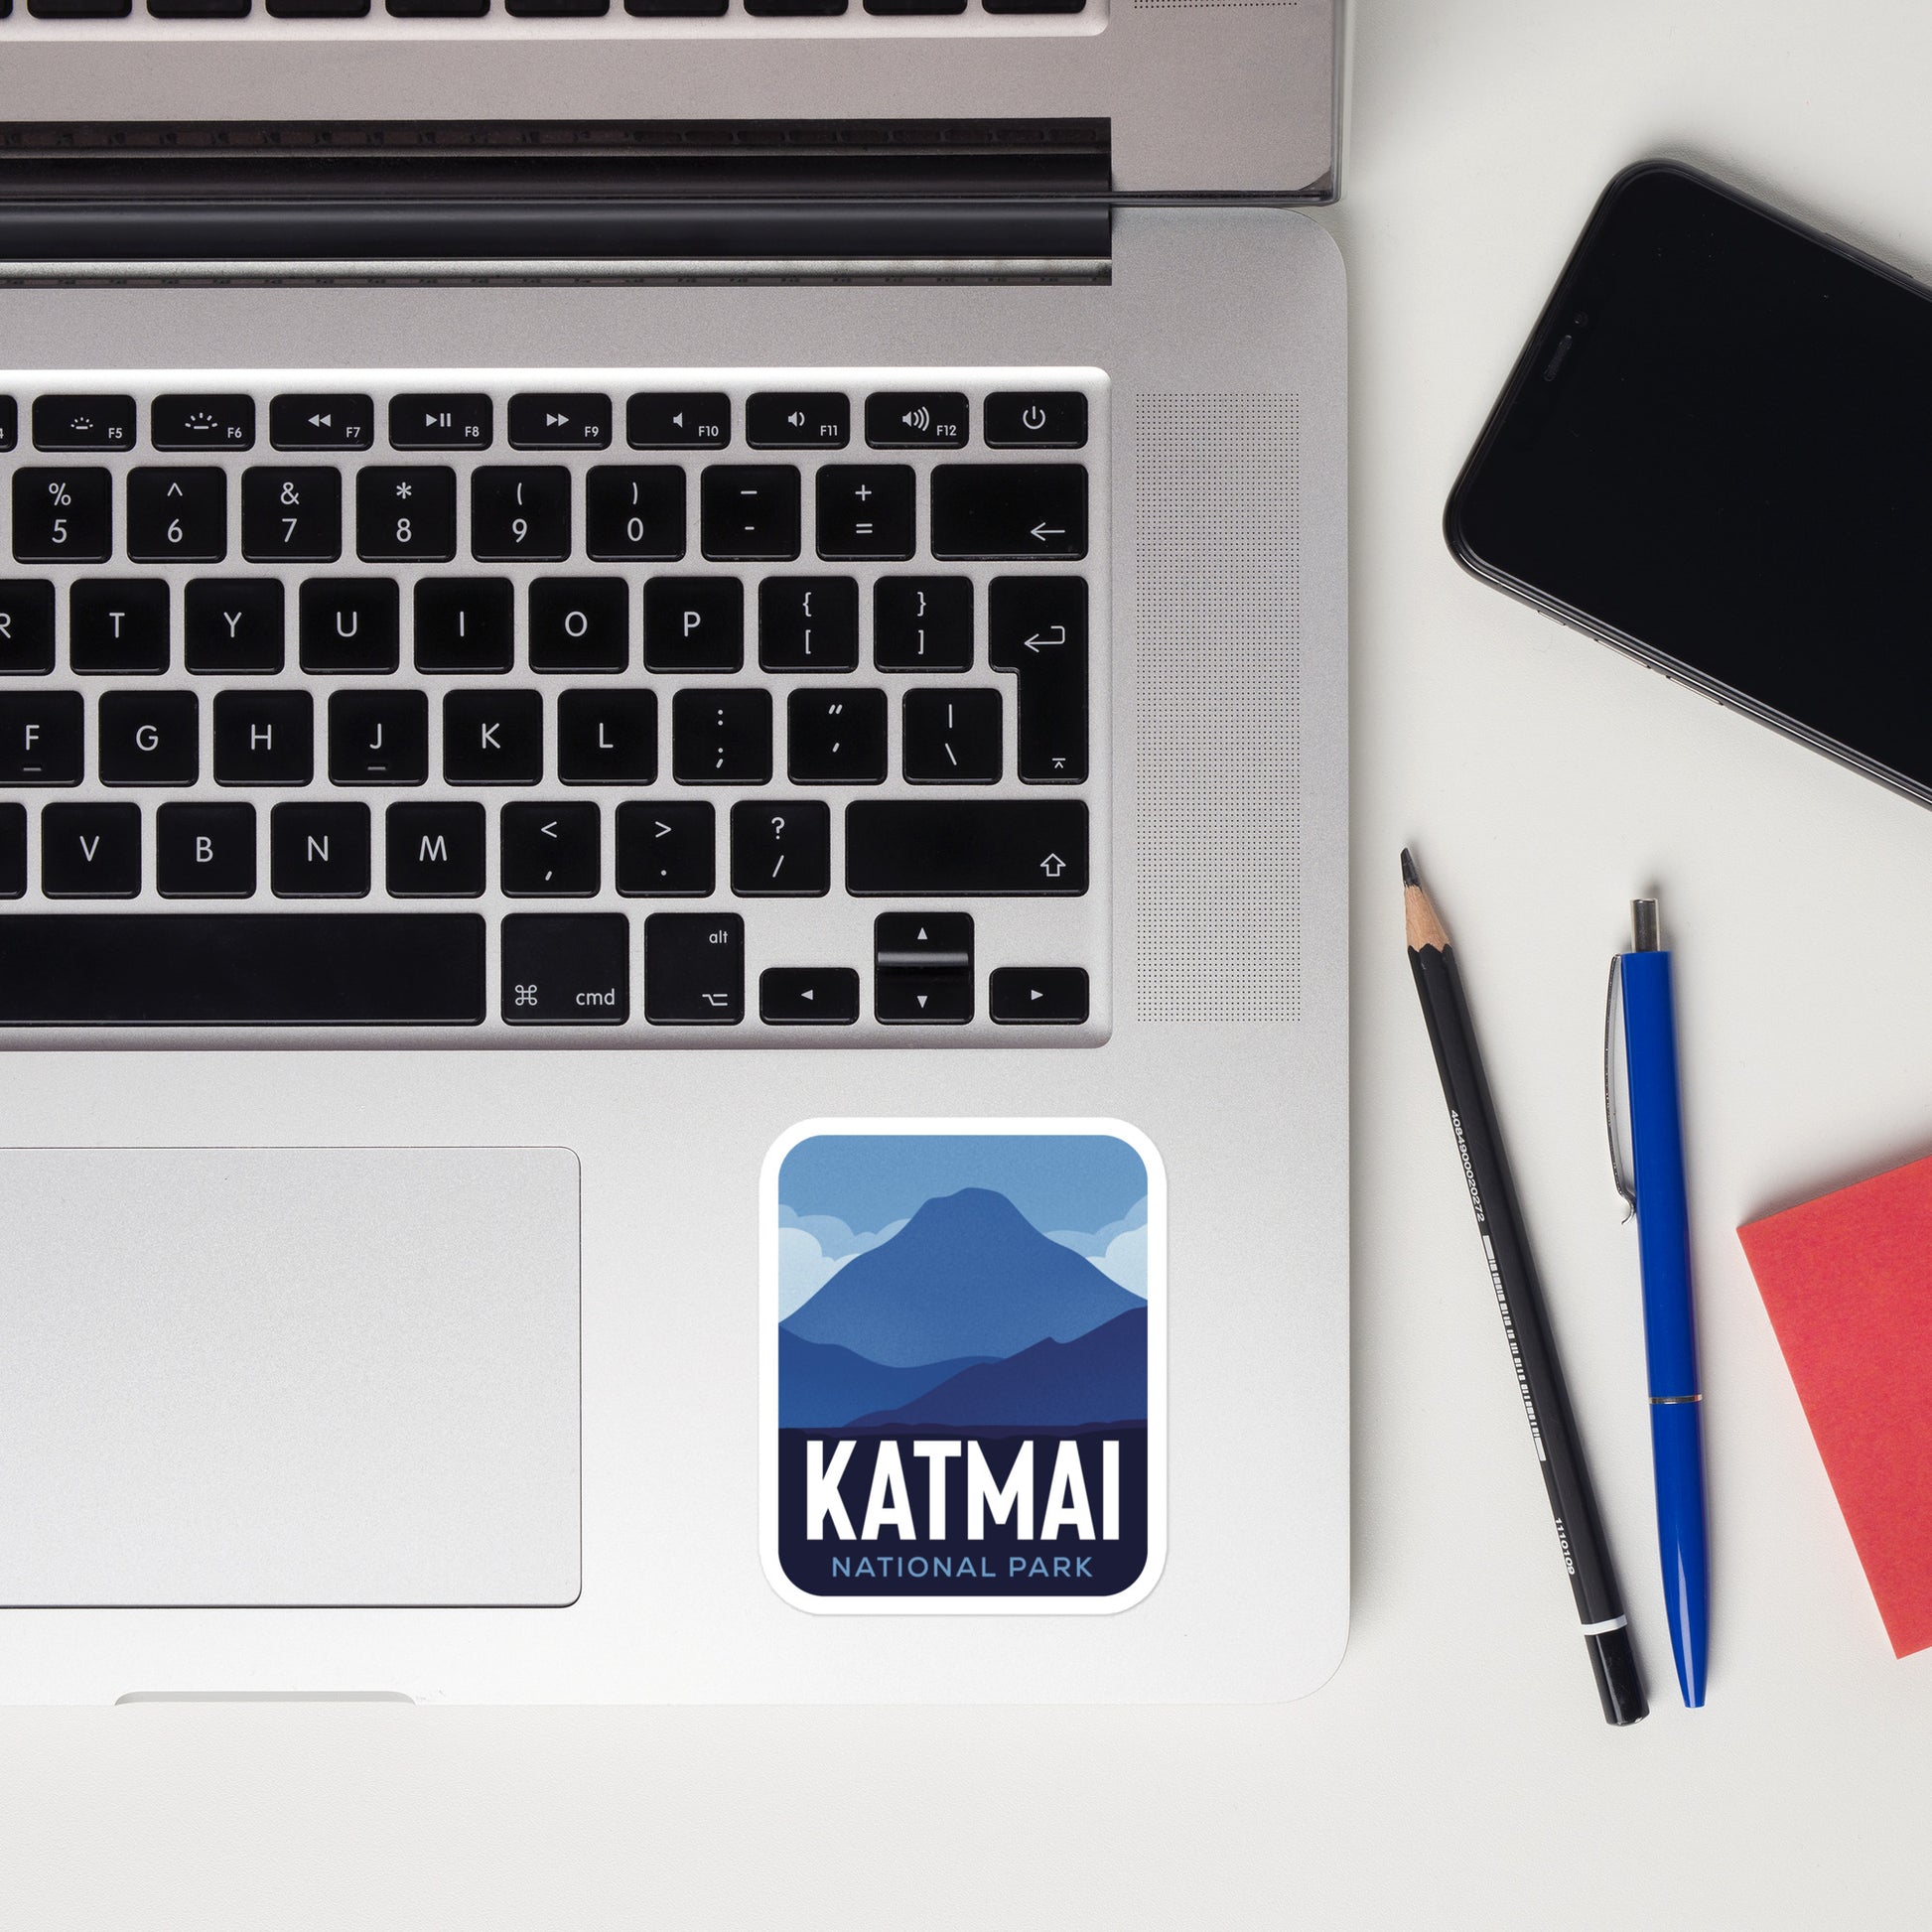 A sticker of Katmai National Park on a laptop